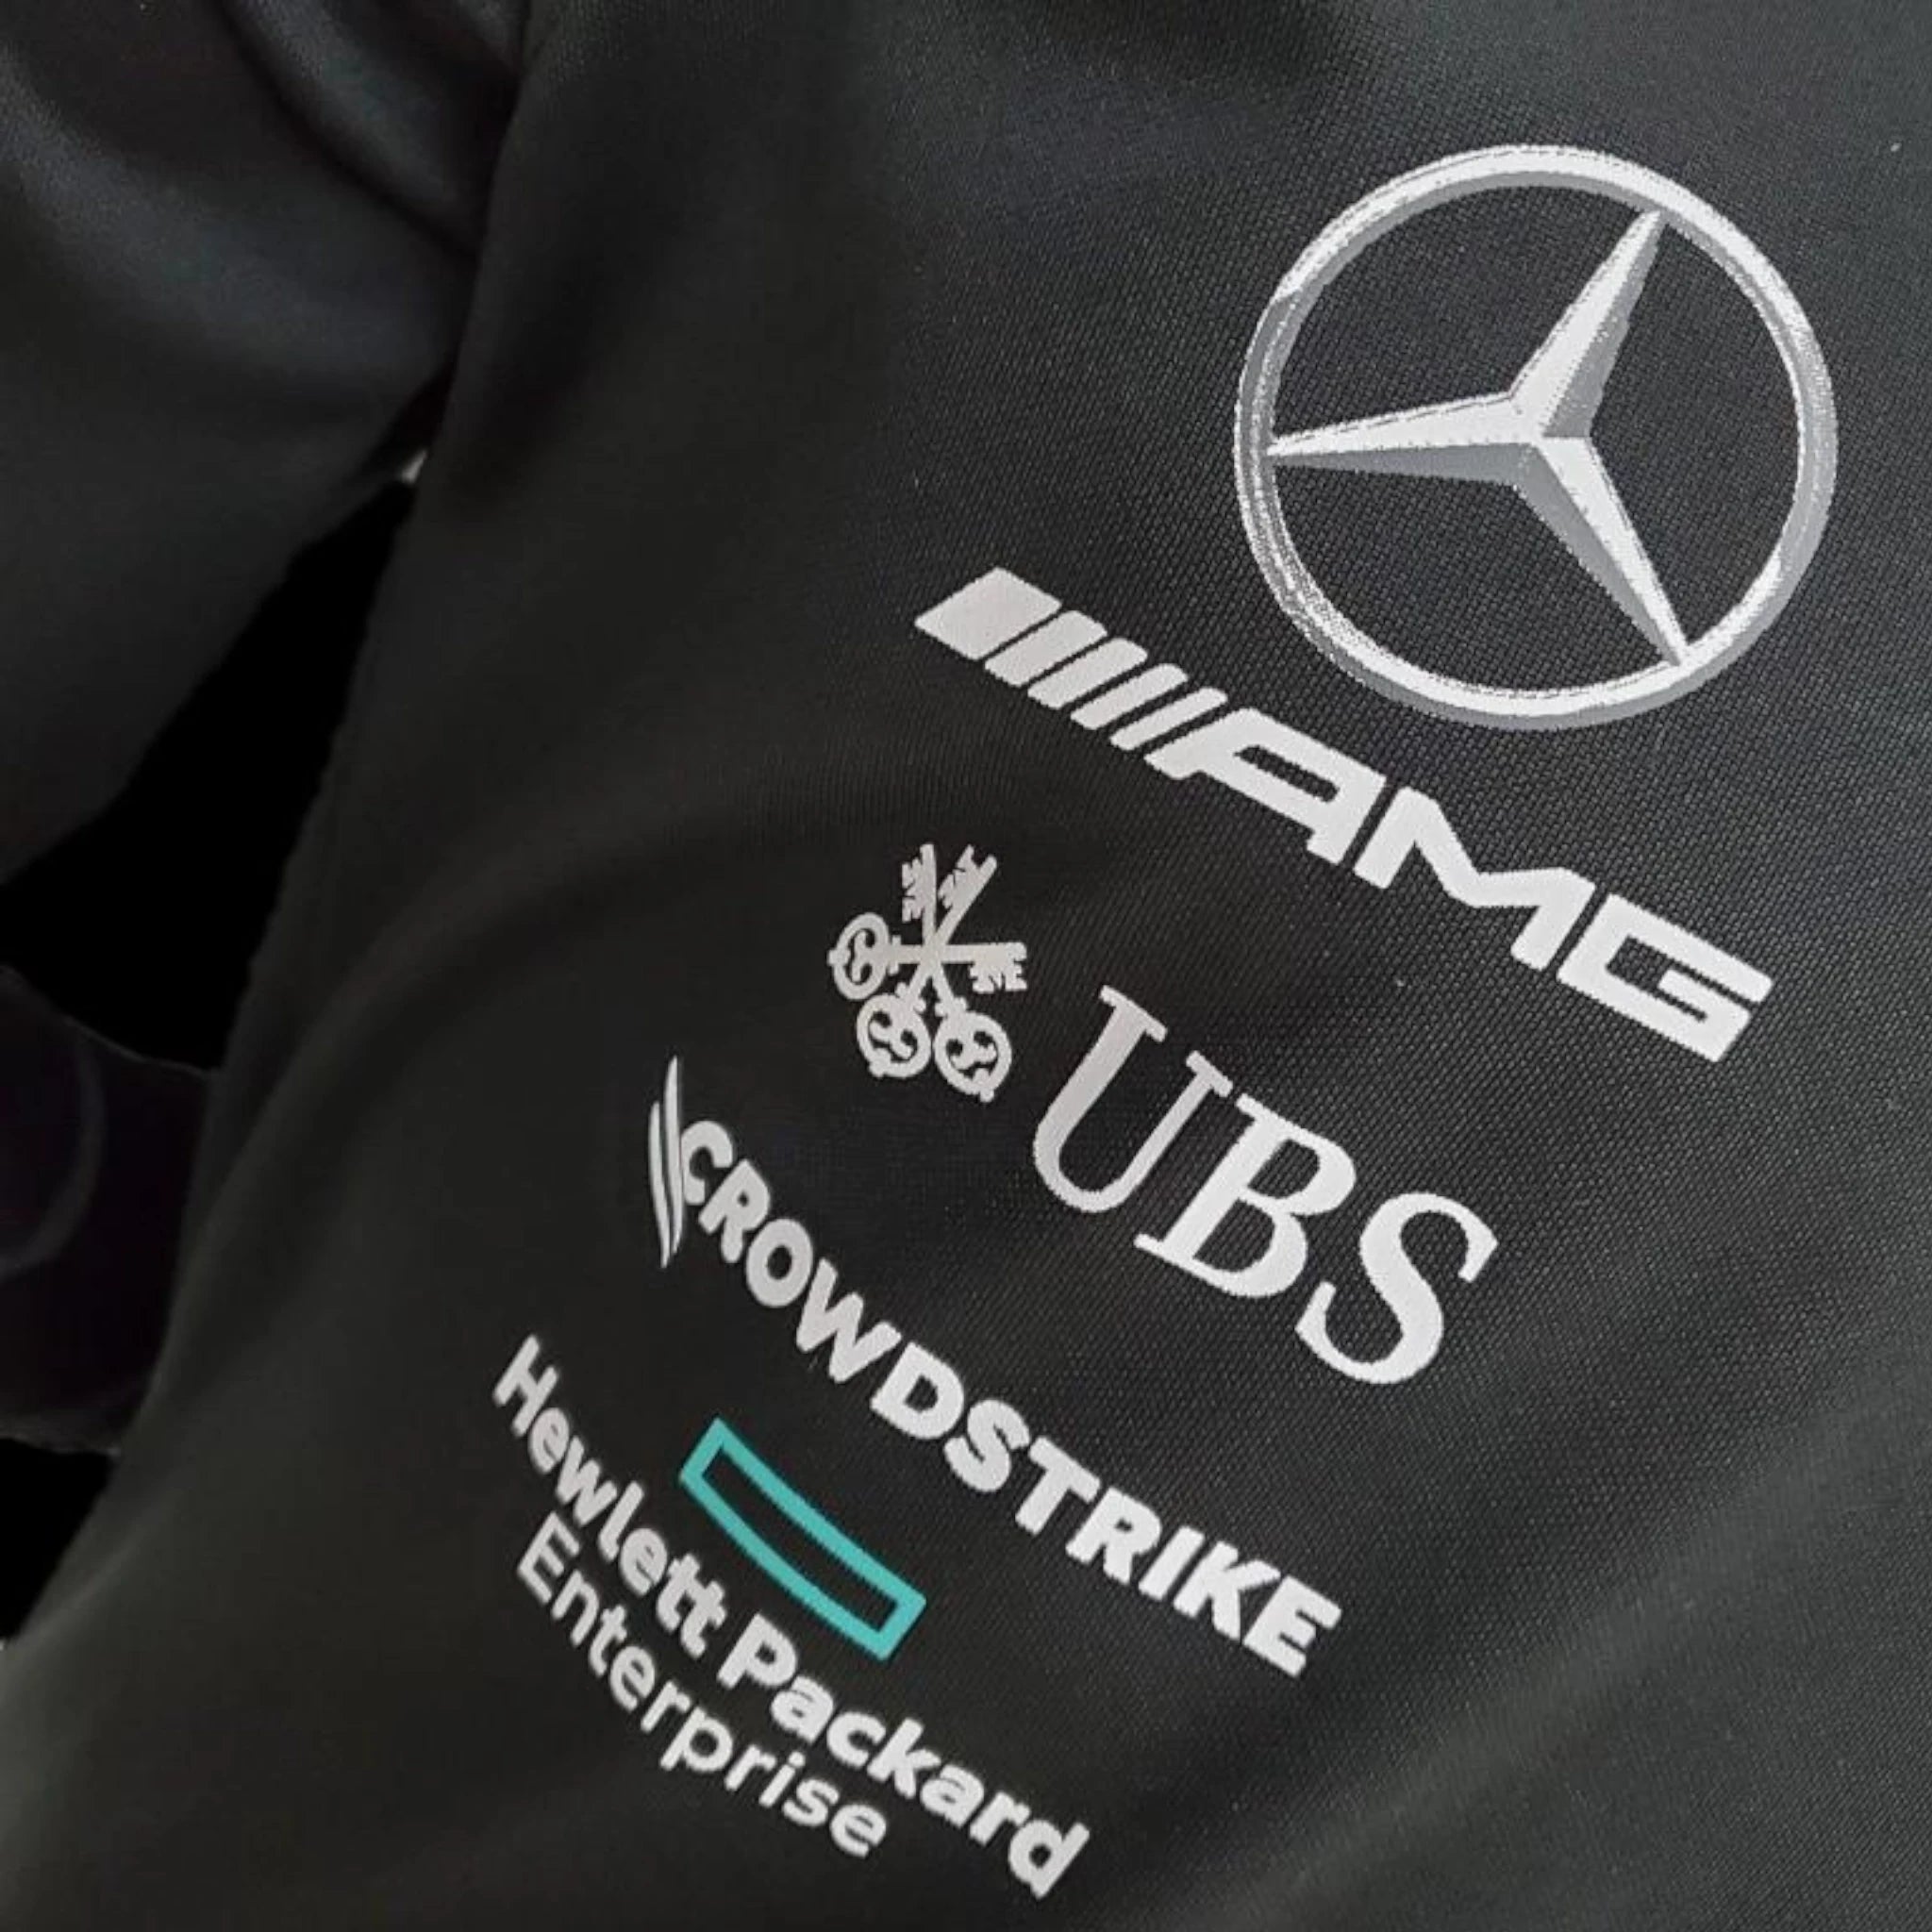 2022 Mercedes F1 Long Sleeve T-Shirt